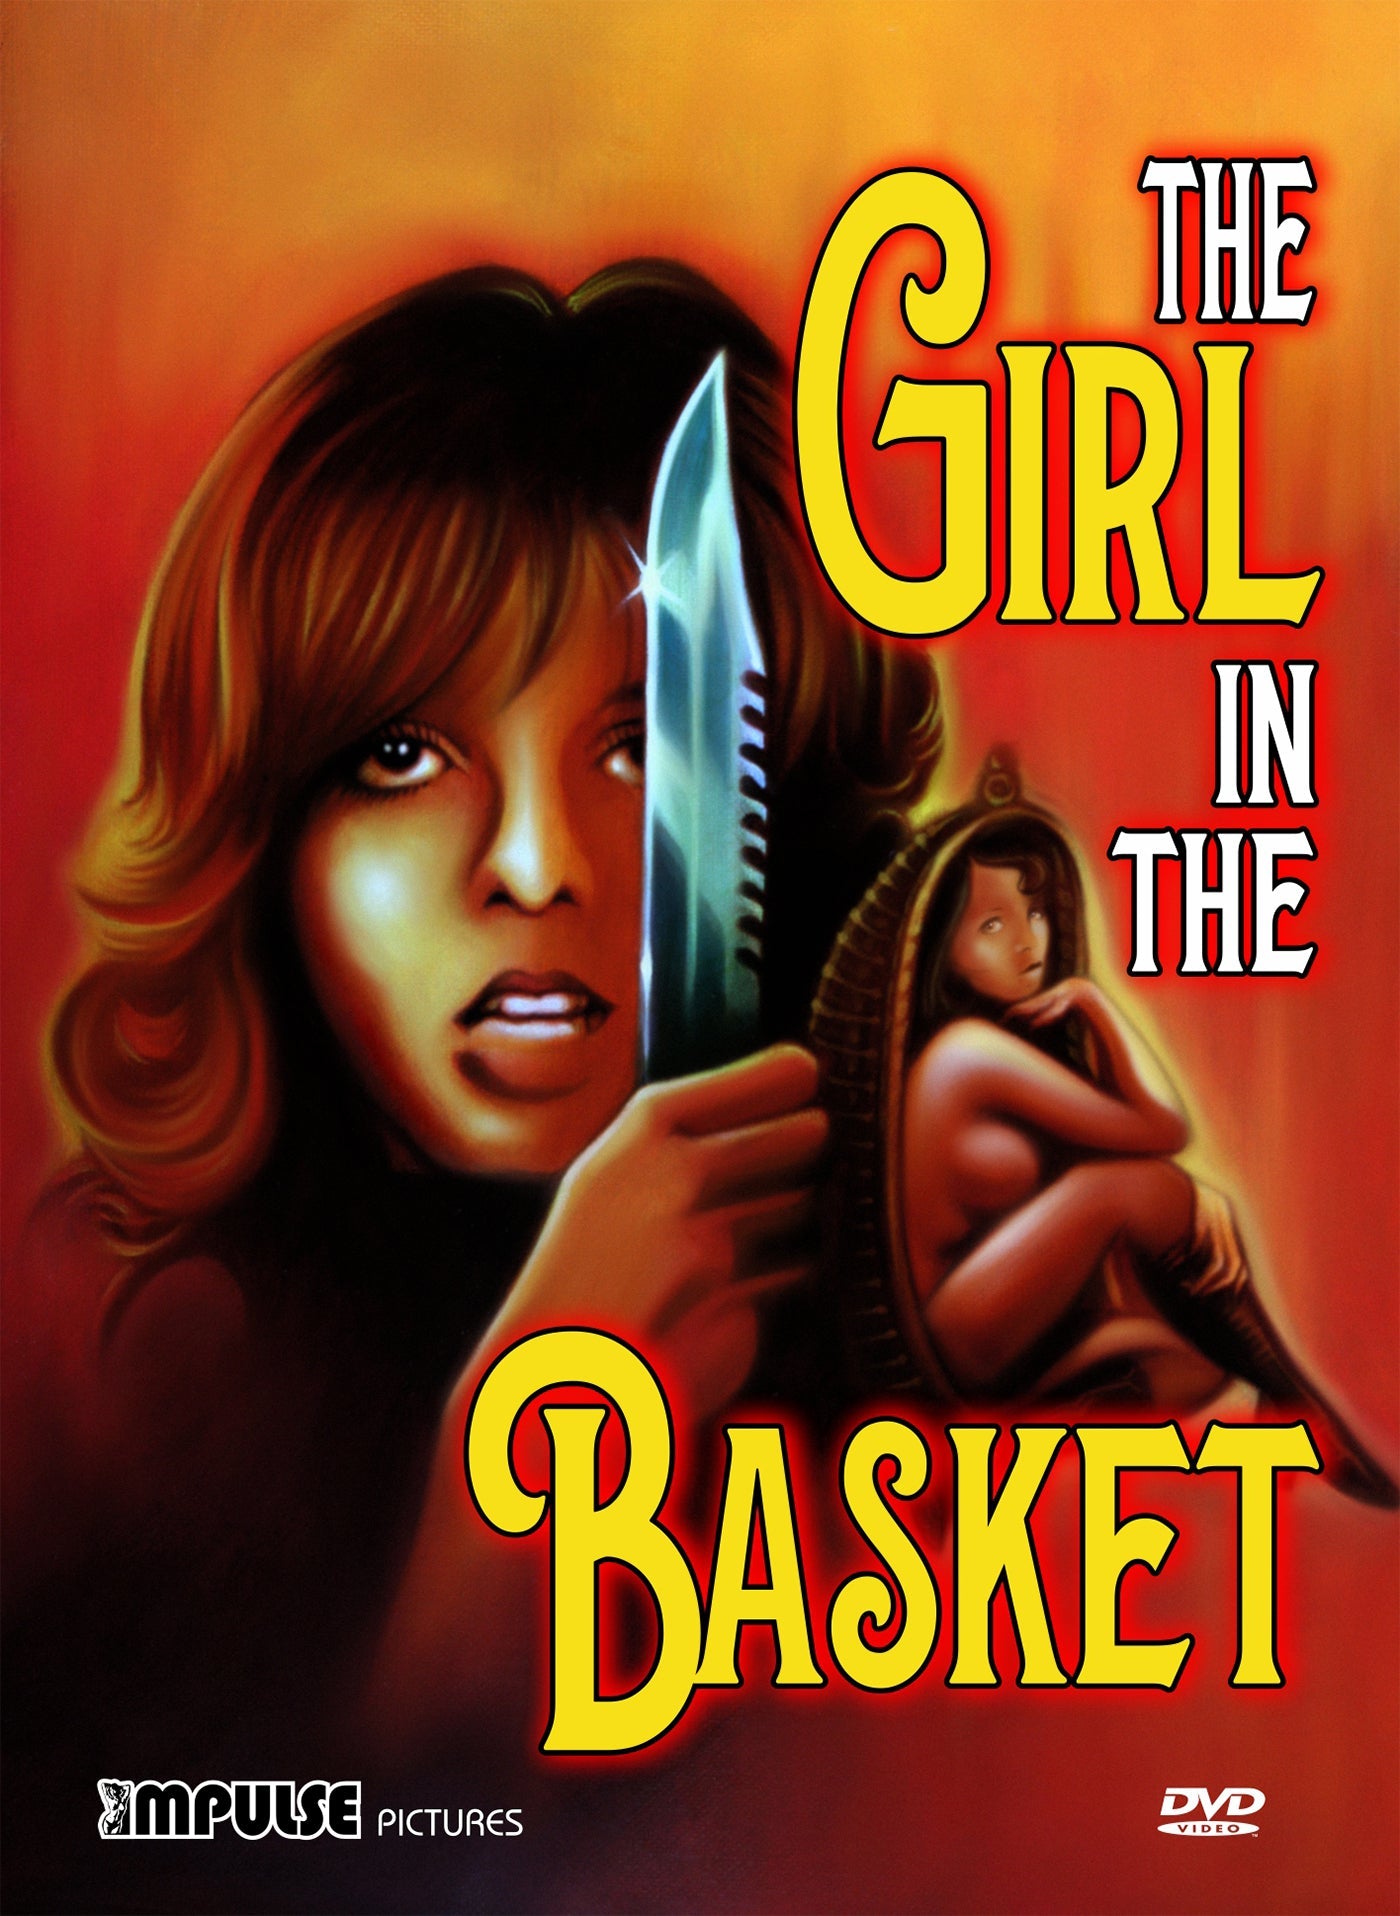 The Girl In Basket Dvd